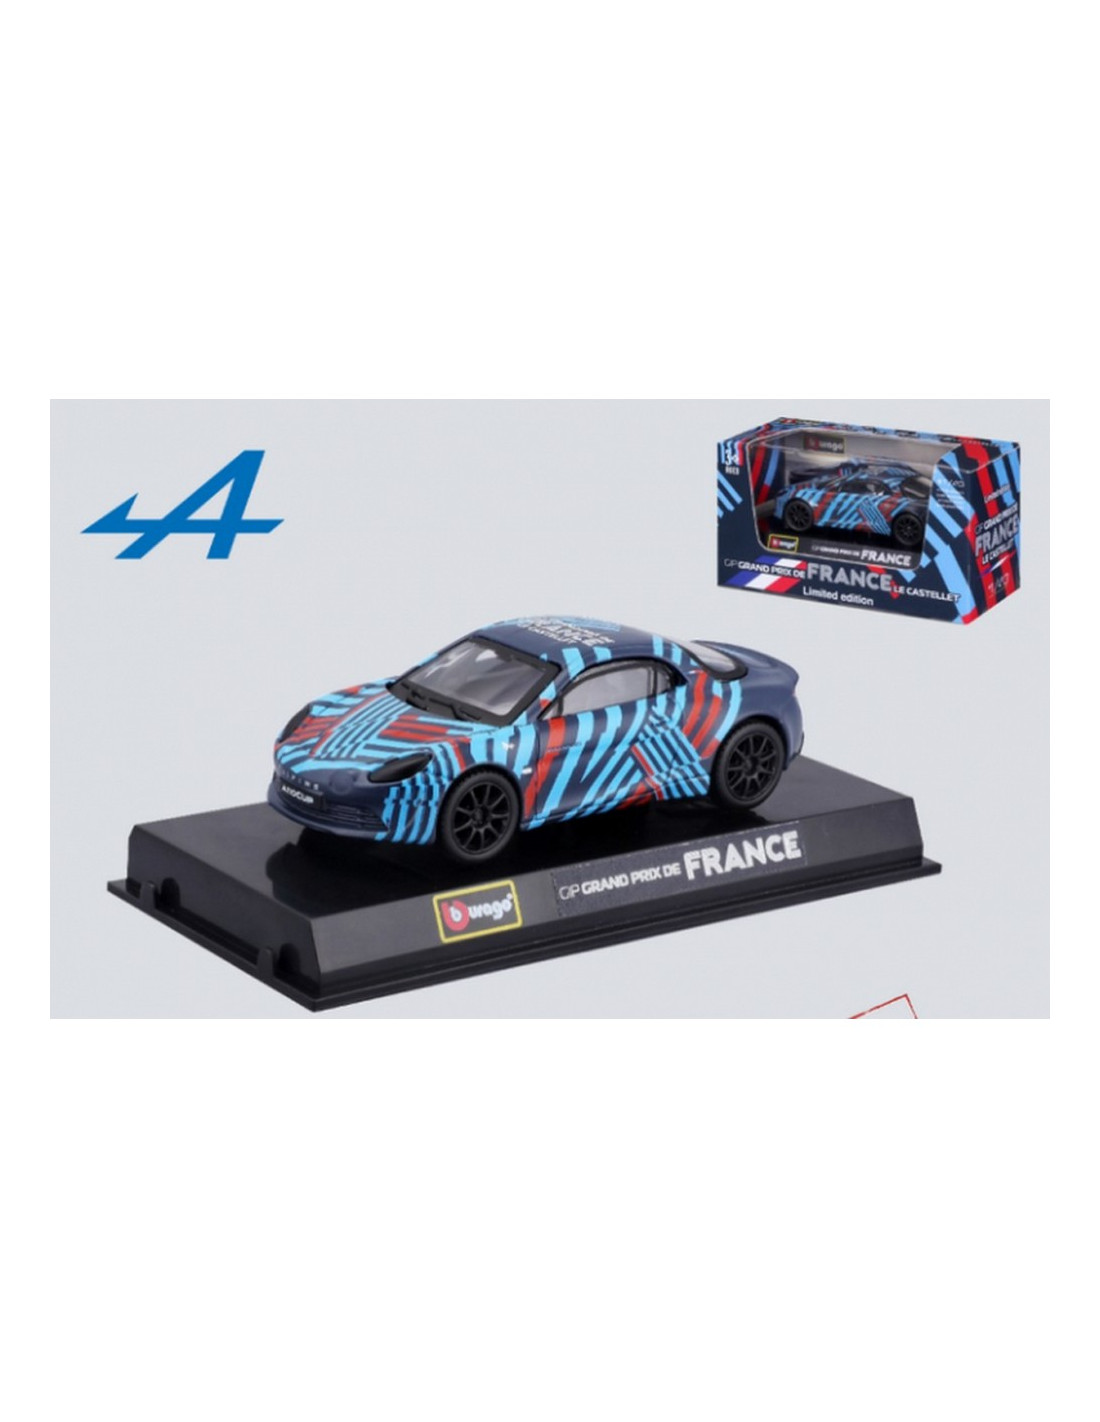 Maquette Alpine A110 Grand prix de France 2022 Burago 1/43ème